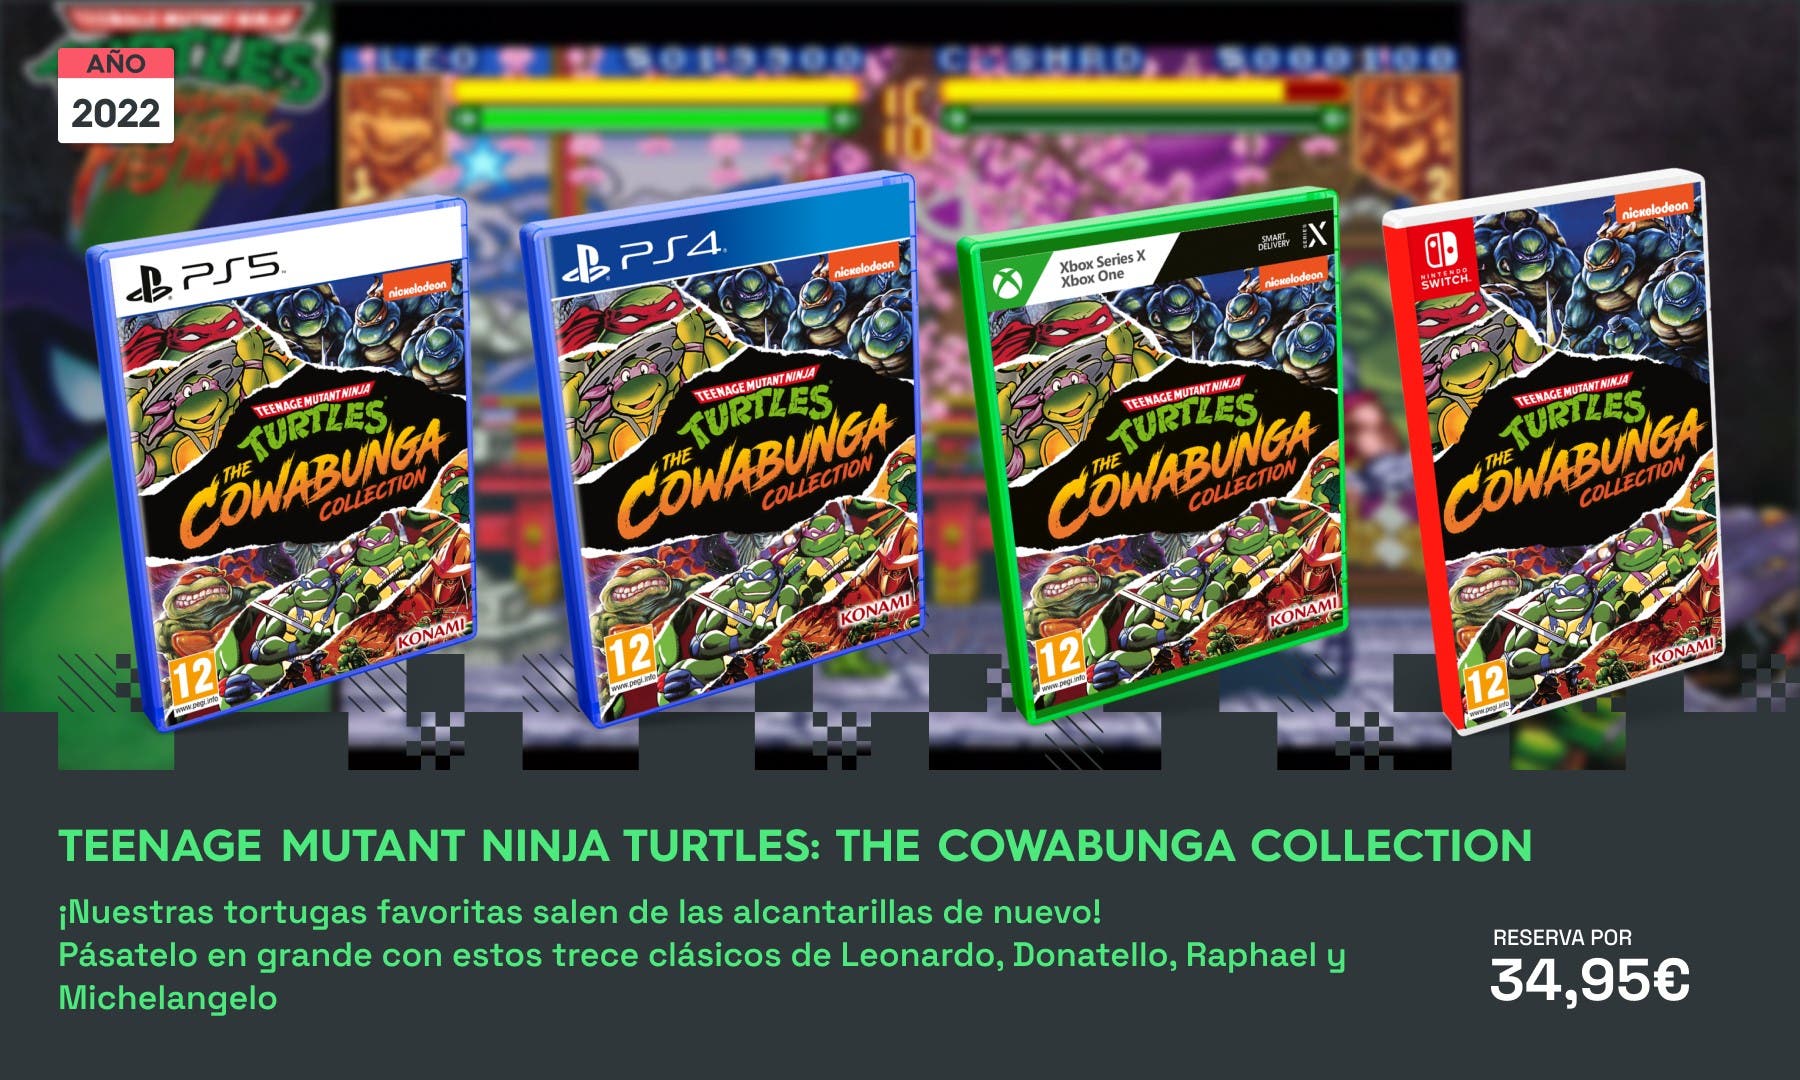 Vuelven las Tortugas Ninja con Teenage Mutant Ninja Turtles: The Cowabunga Collection para Nintendo Switch: reserva disponible